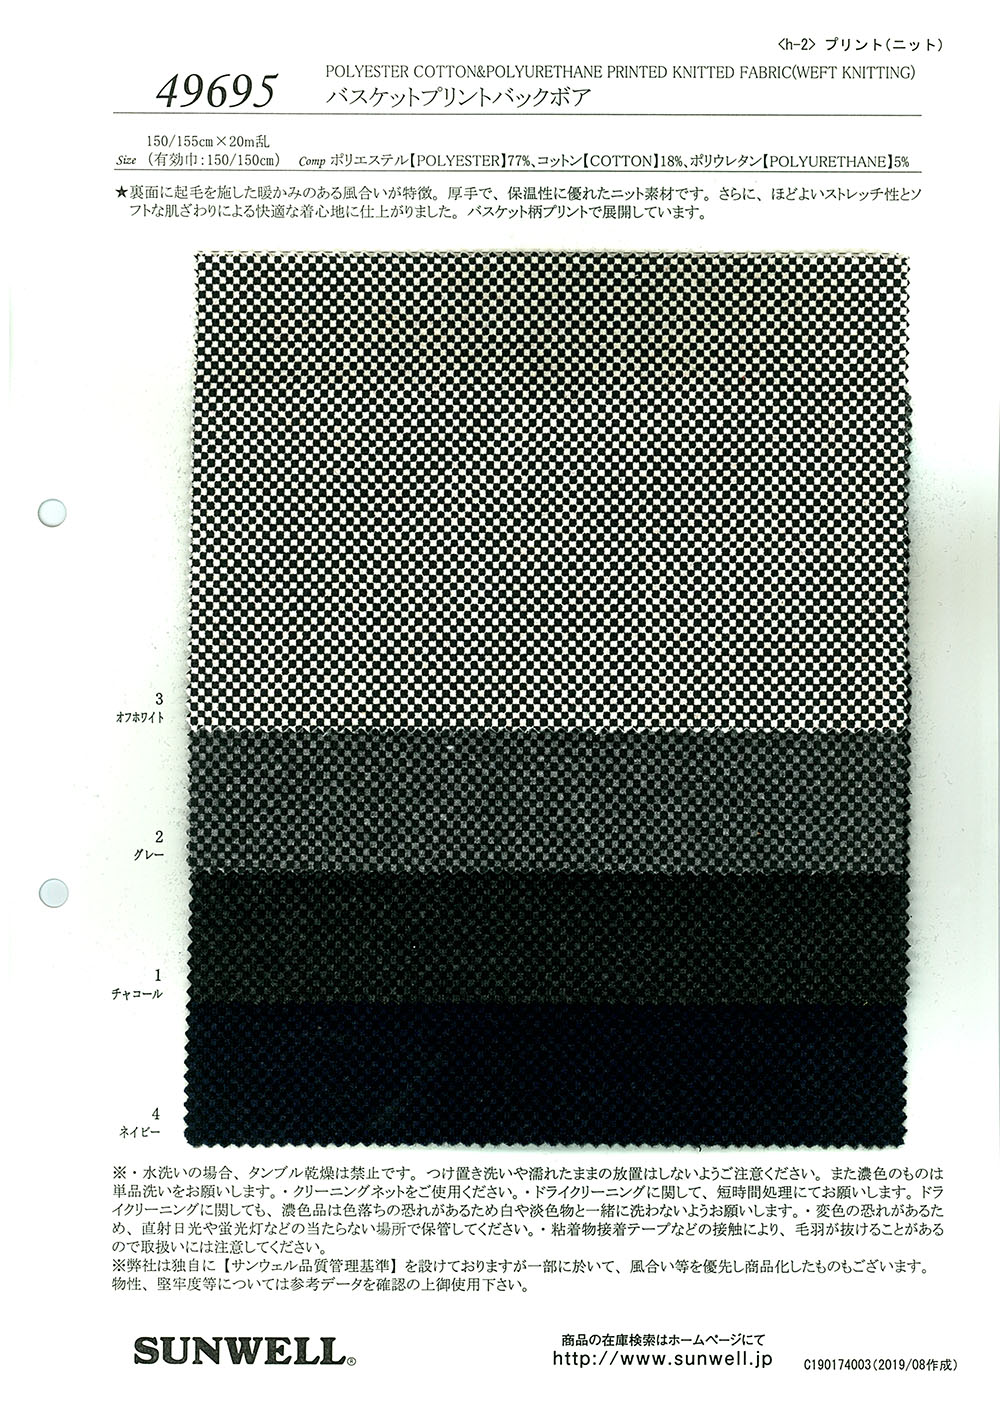 49695 Impression De Panier[Fabrication De Textile] SUNWELL